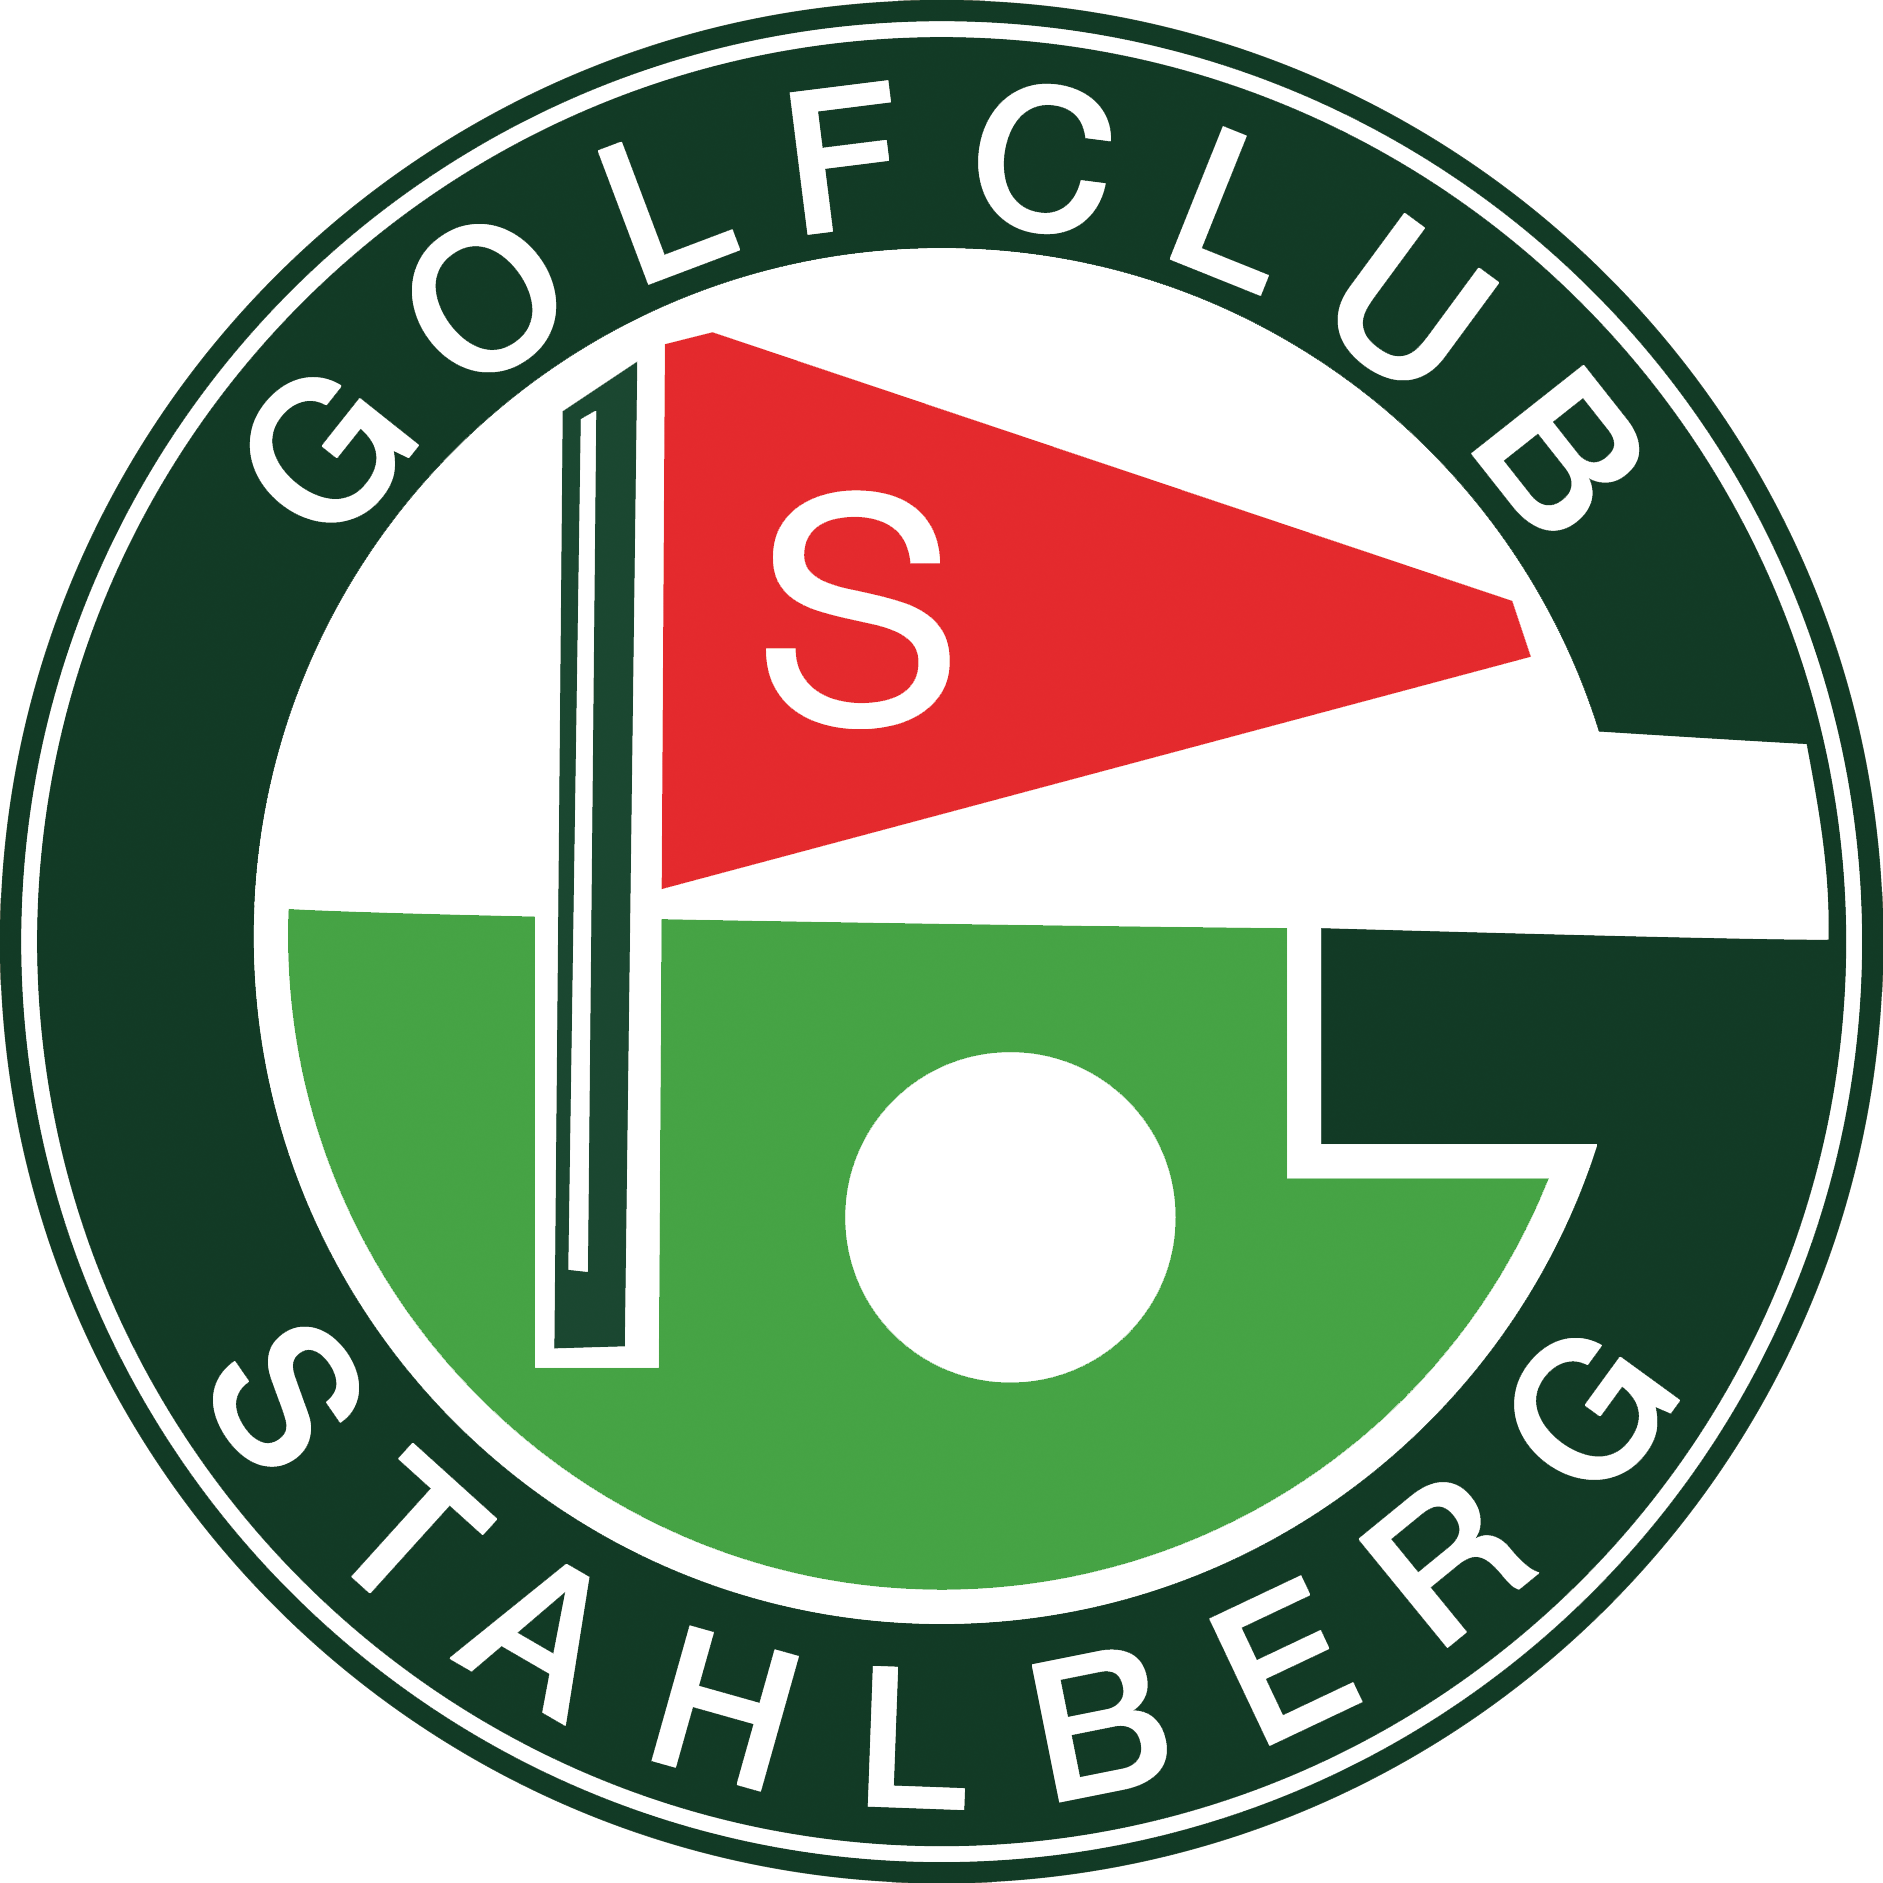 (c) Golfclub-stahlberg.de